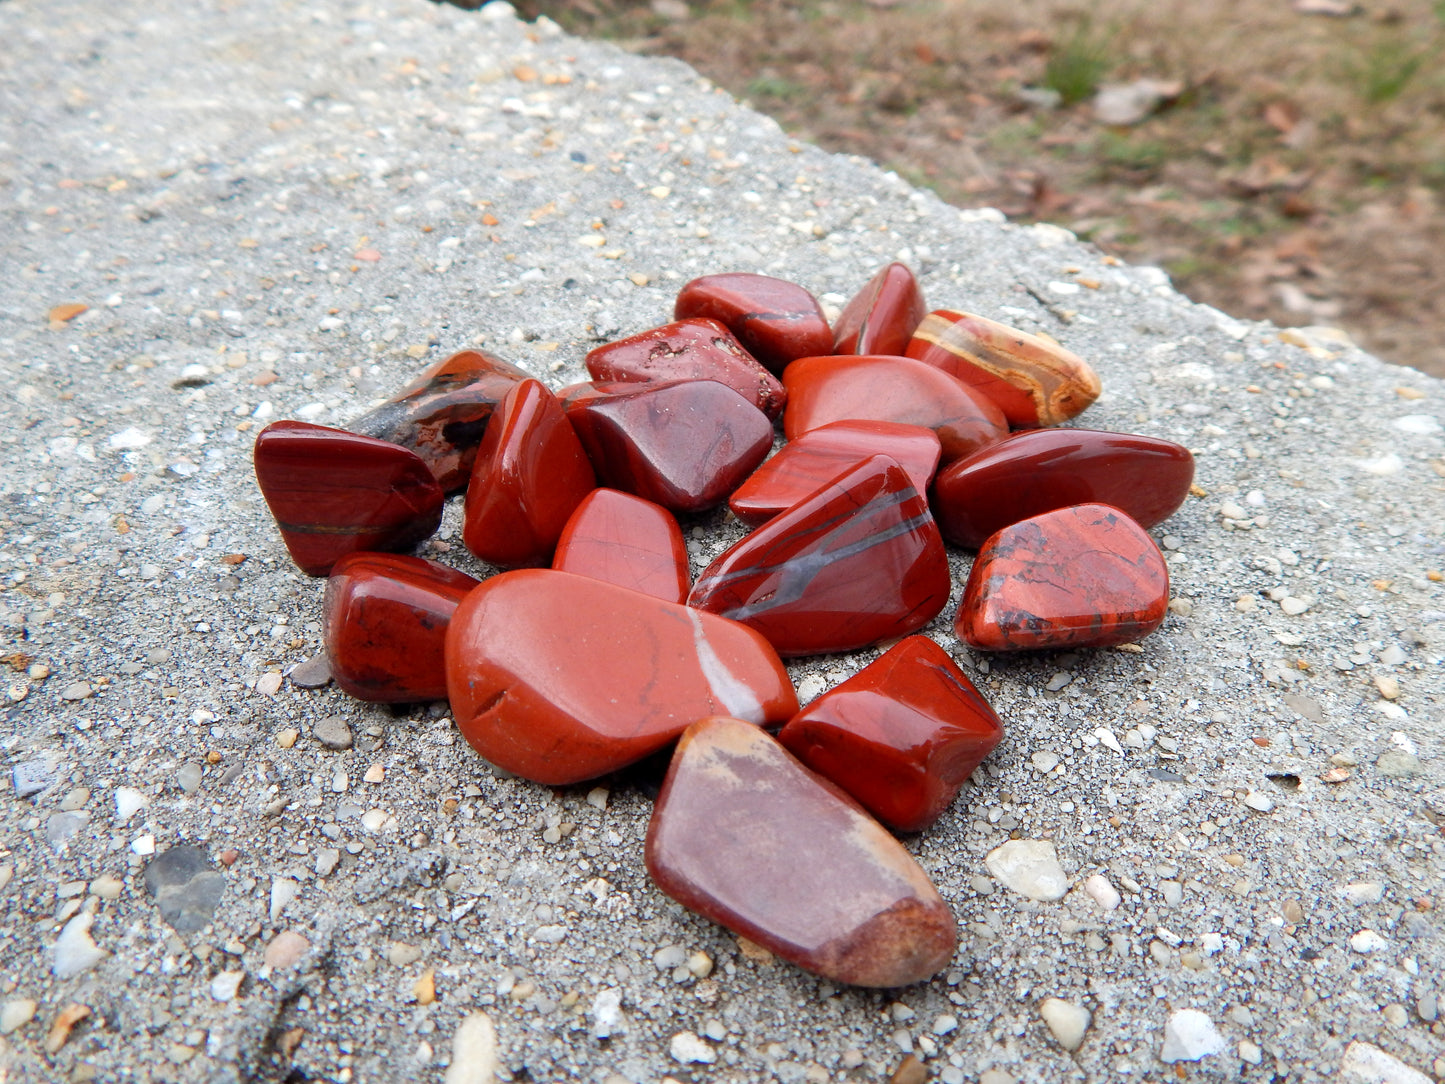 Red jasper tumbled stones